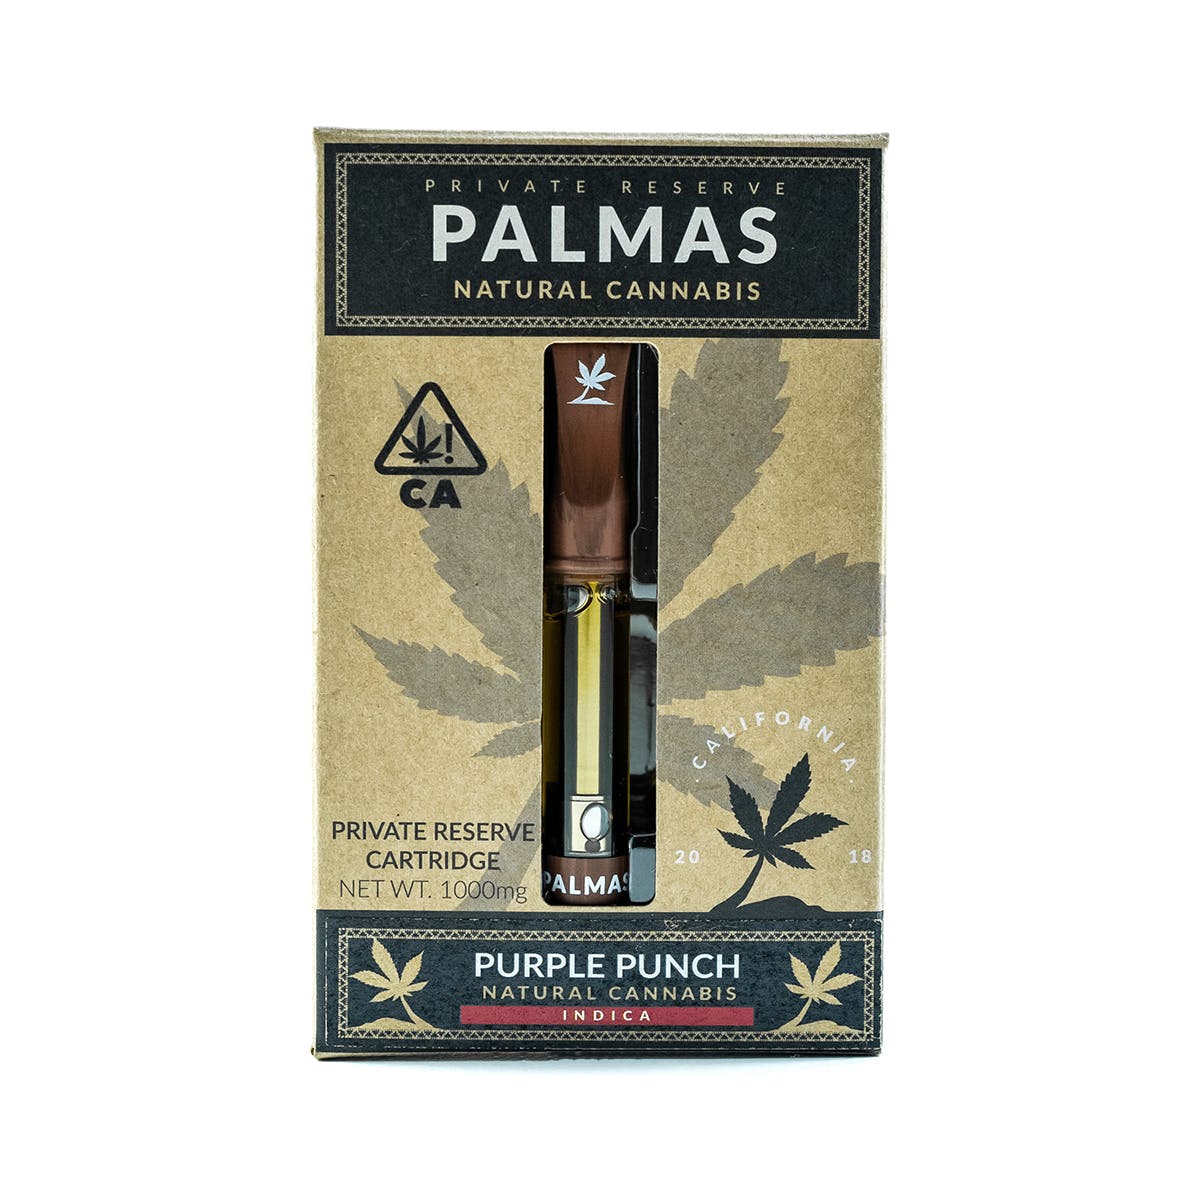 marijuana-dispensaries-og-central-20-cap-in-los-angeles-palmas-private-reserve-cartridge-purple-punch